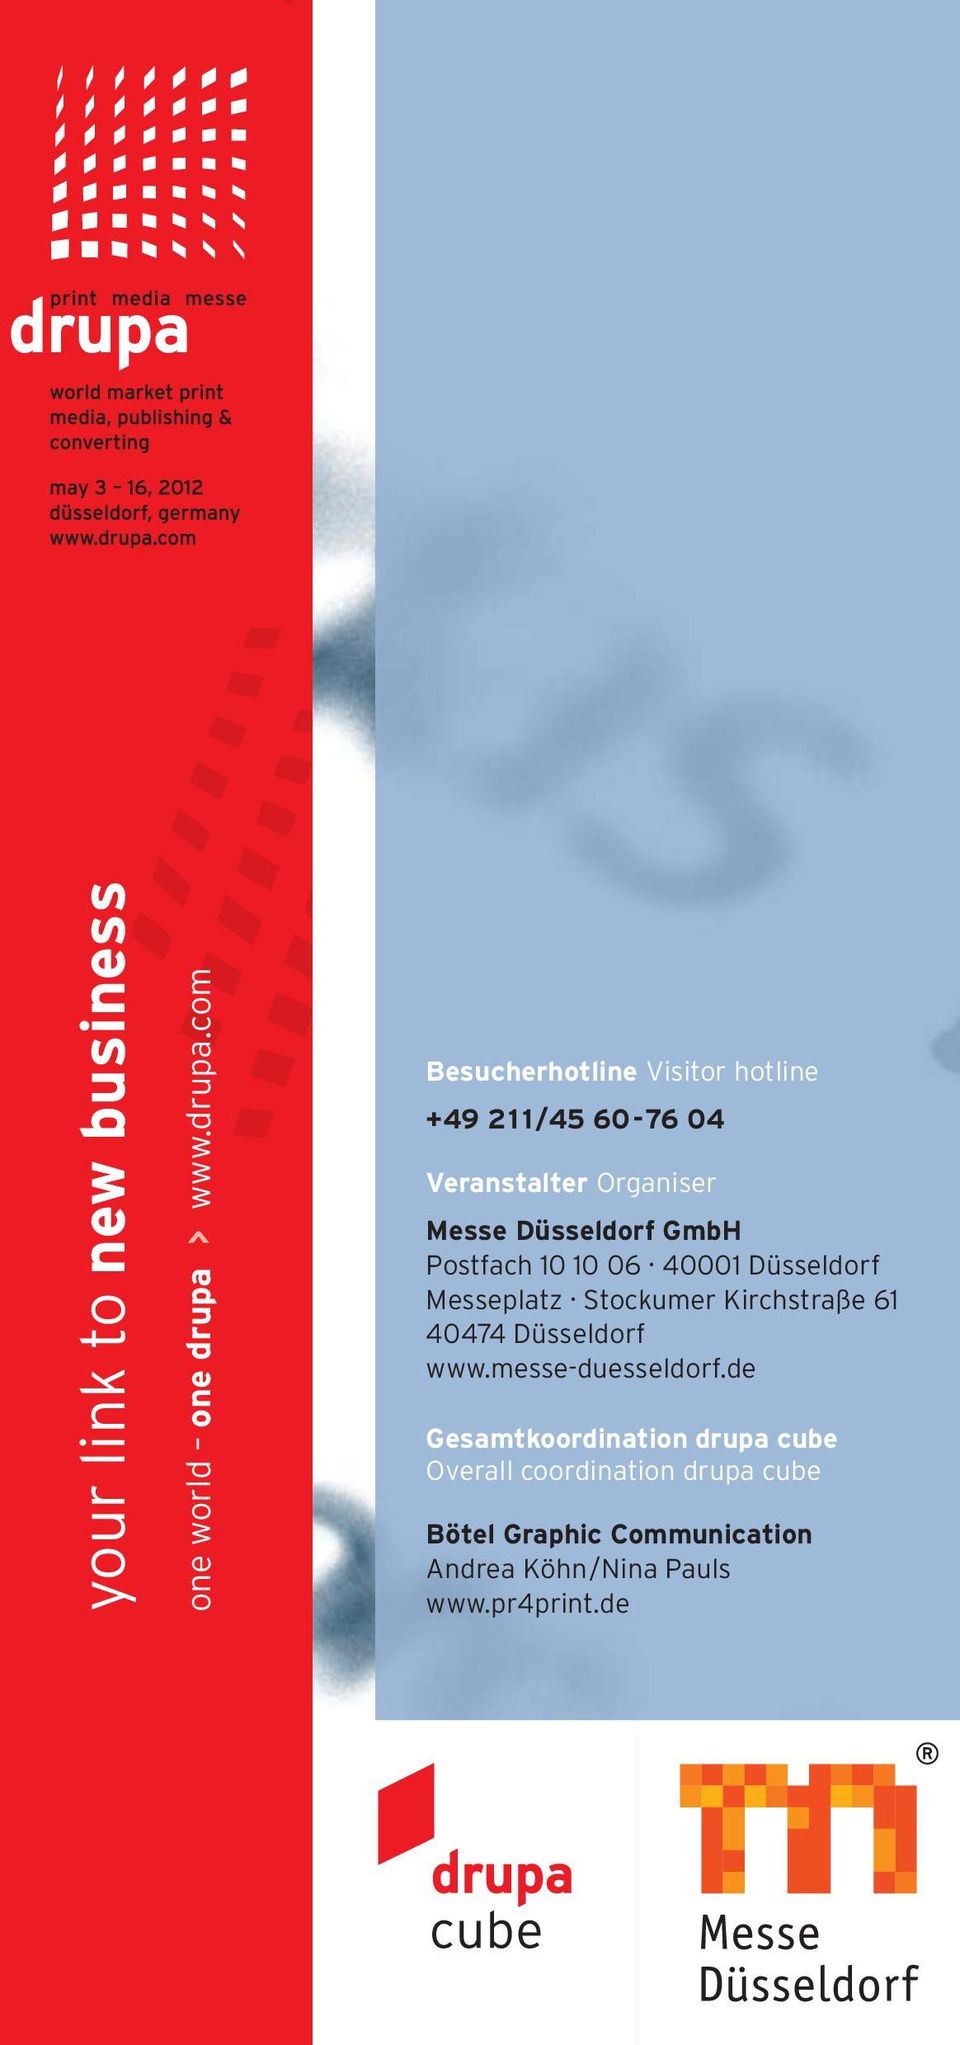 com Besucherhotline Visitor hotline +49 211 / 45 60-76 04 Veranstalter Organiser Messe Düsseldorf